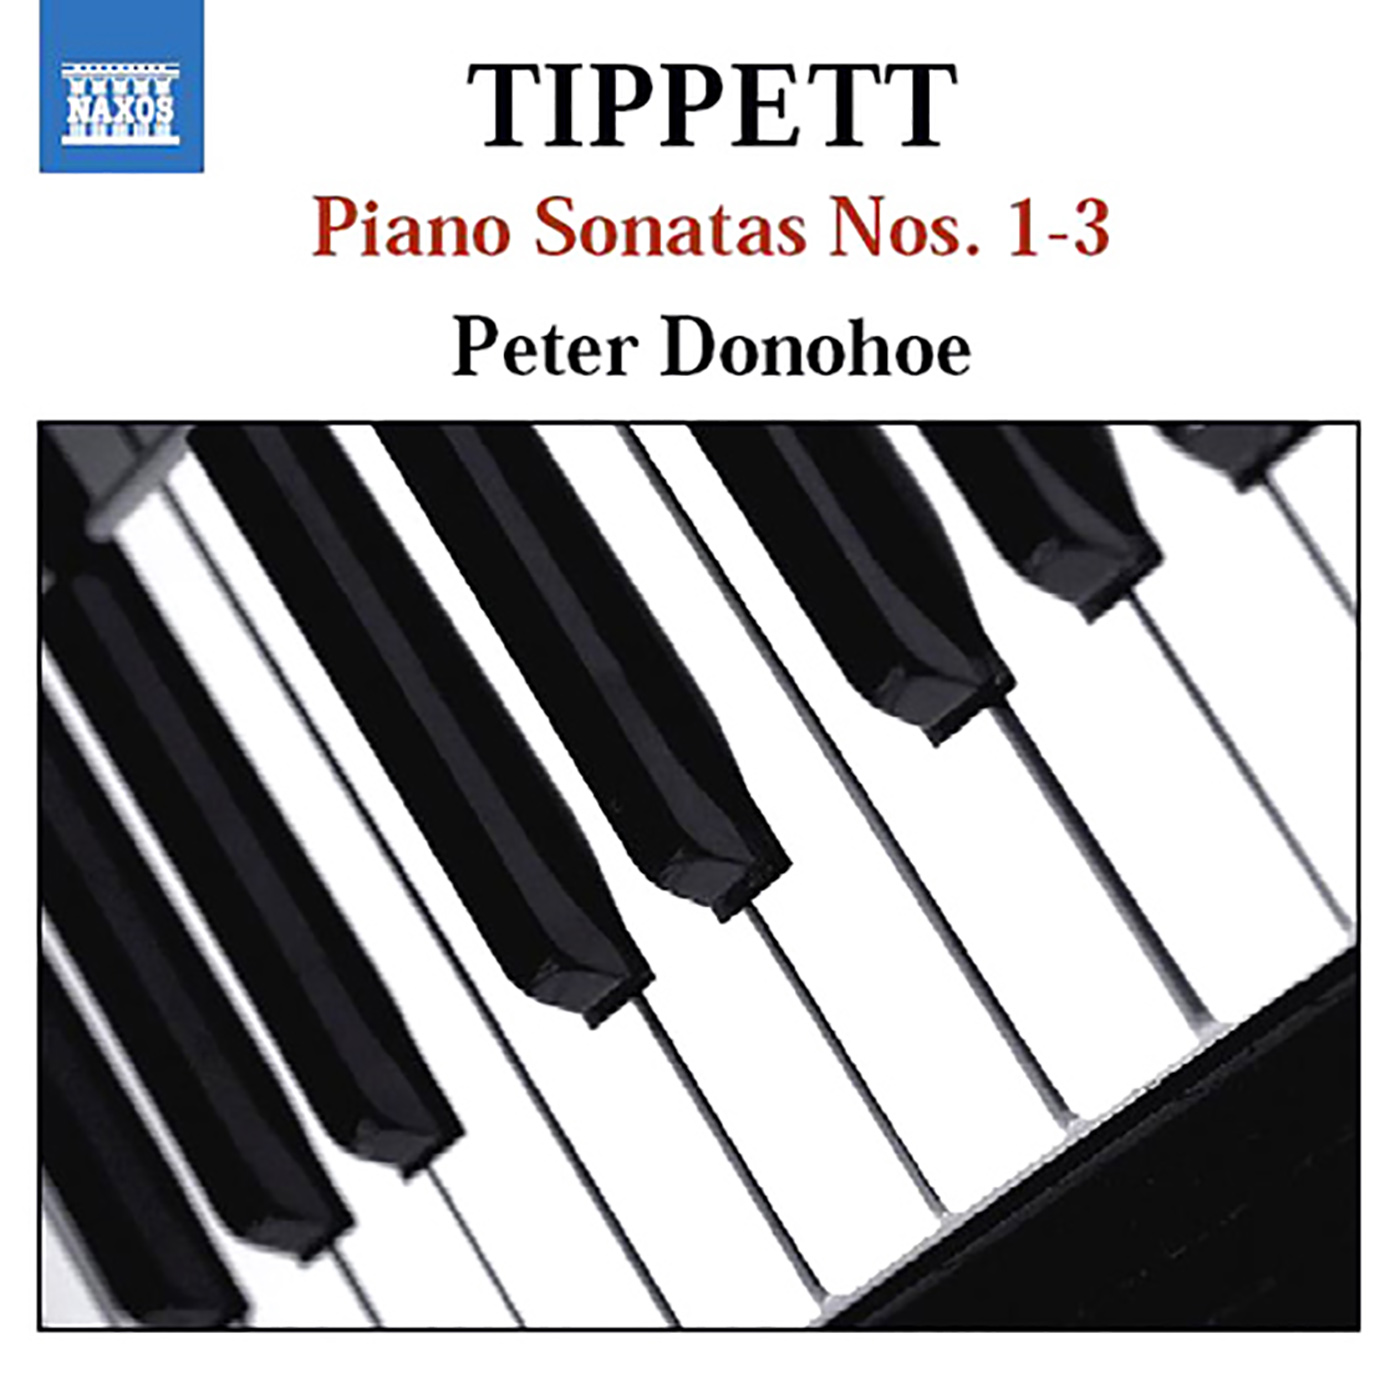 TIPPETT: Piano Sonatas Nos. 1-3